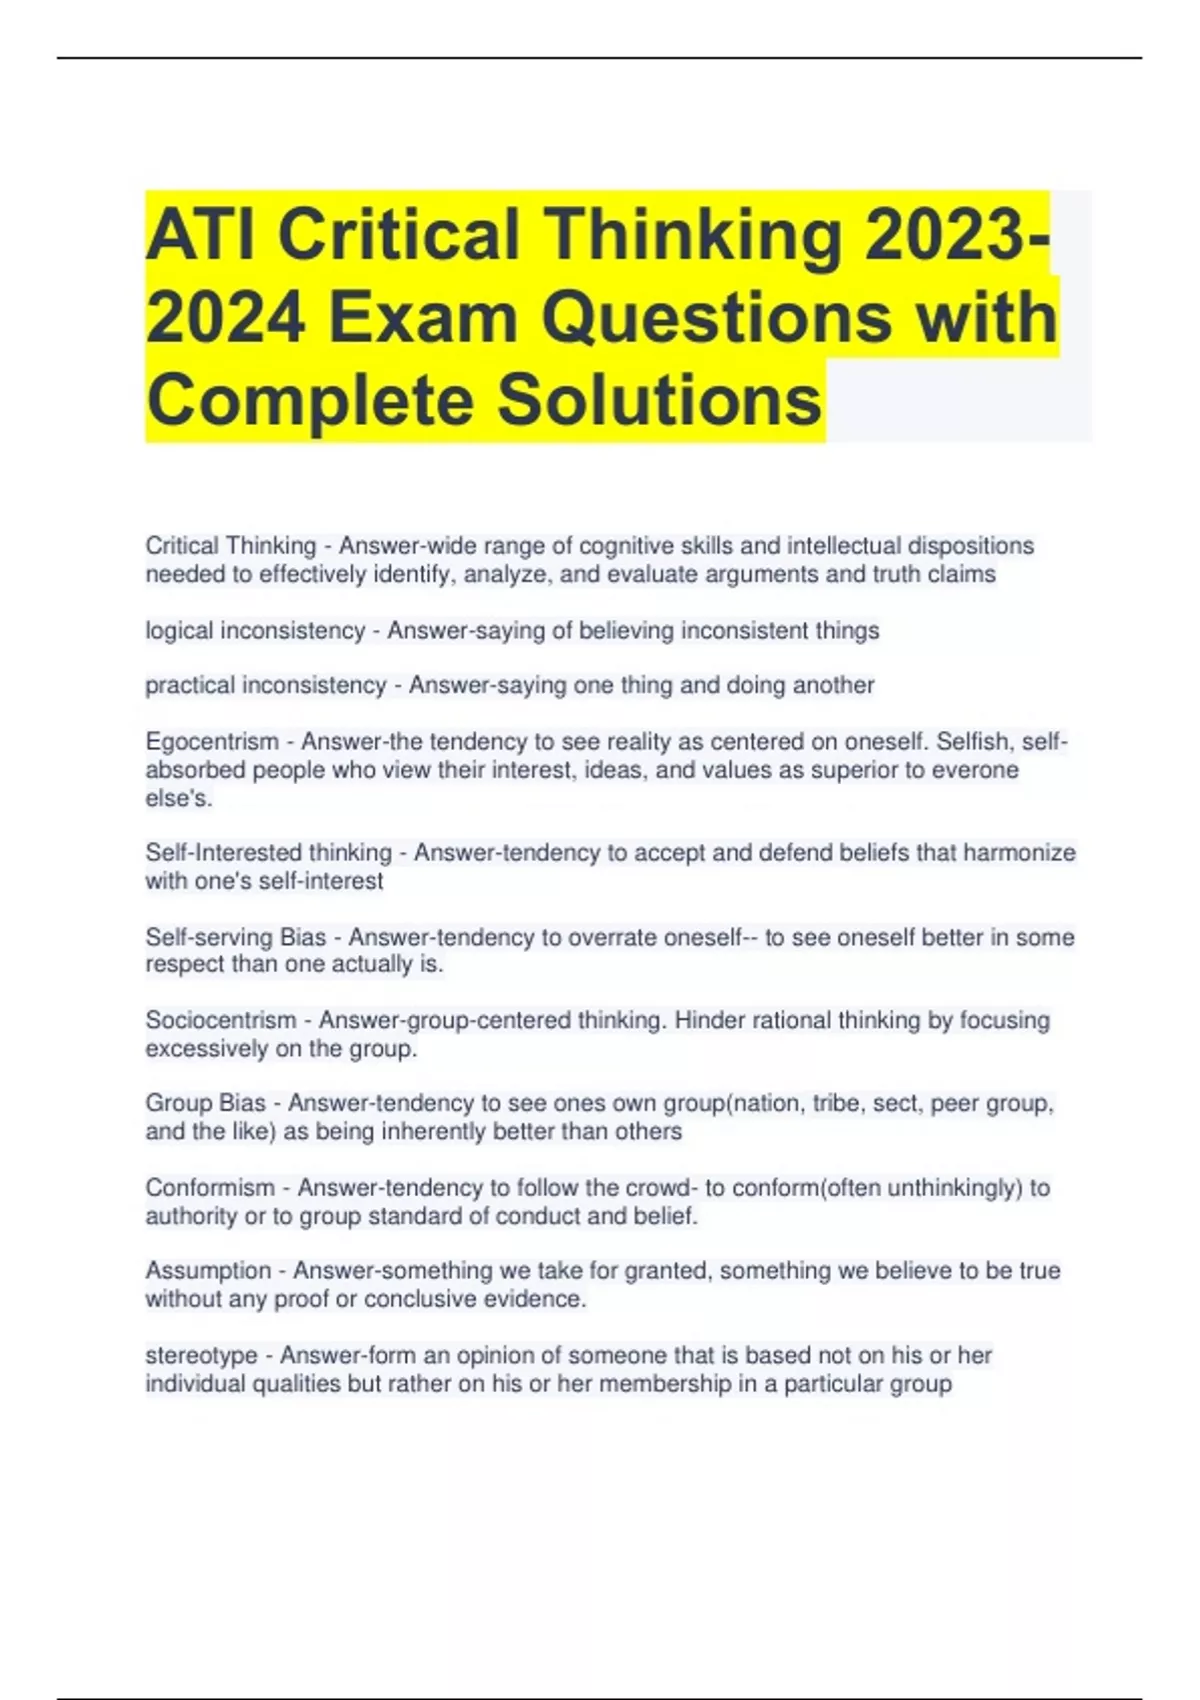 ati critical thinking exam 2023